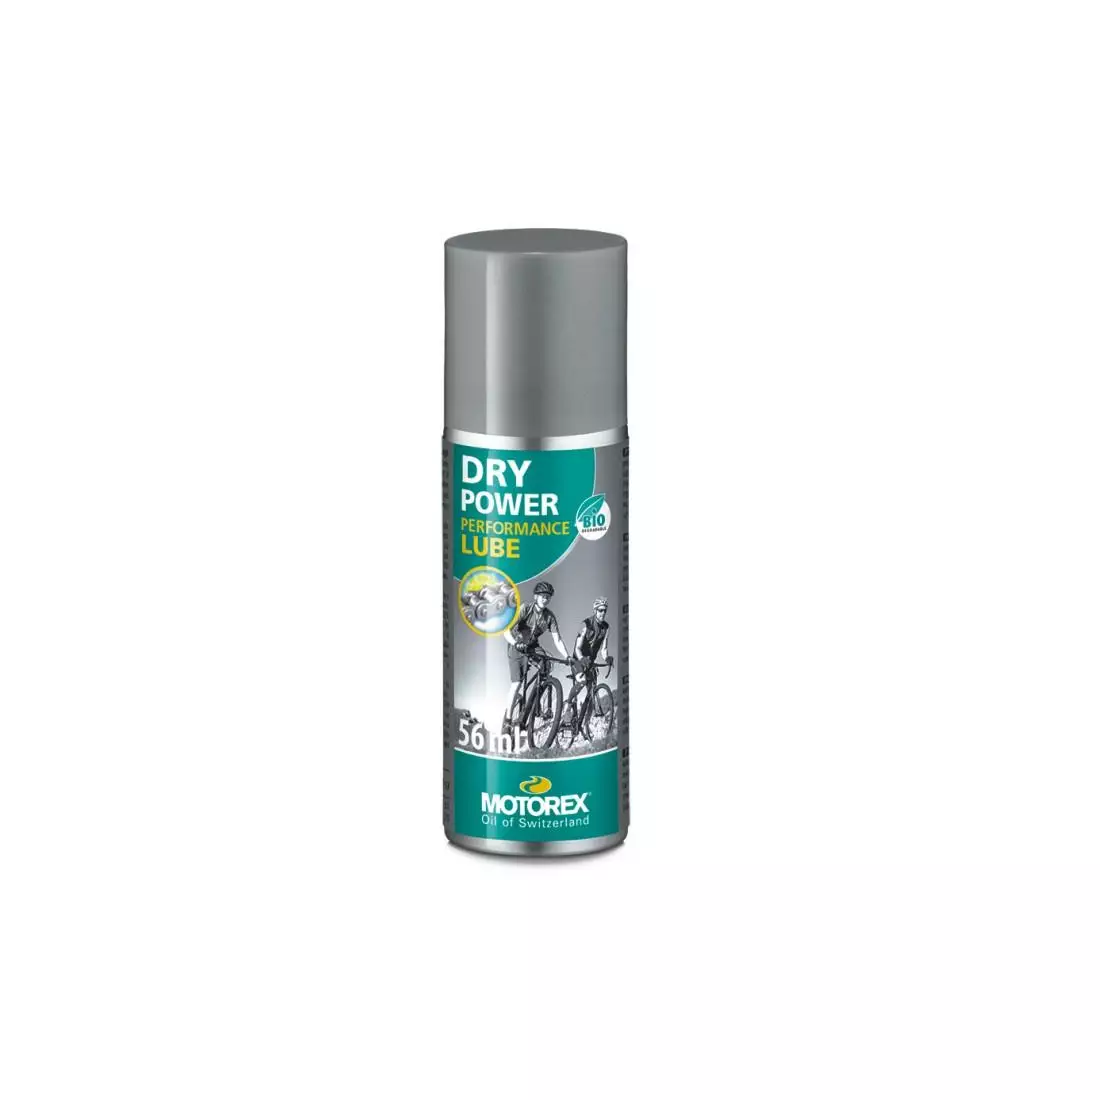 MOTOREX DRY POWER chain lubricant dry conditions, spray 56 ml